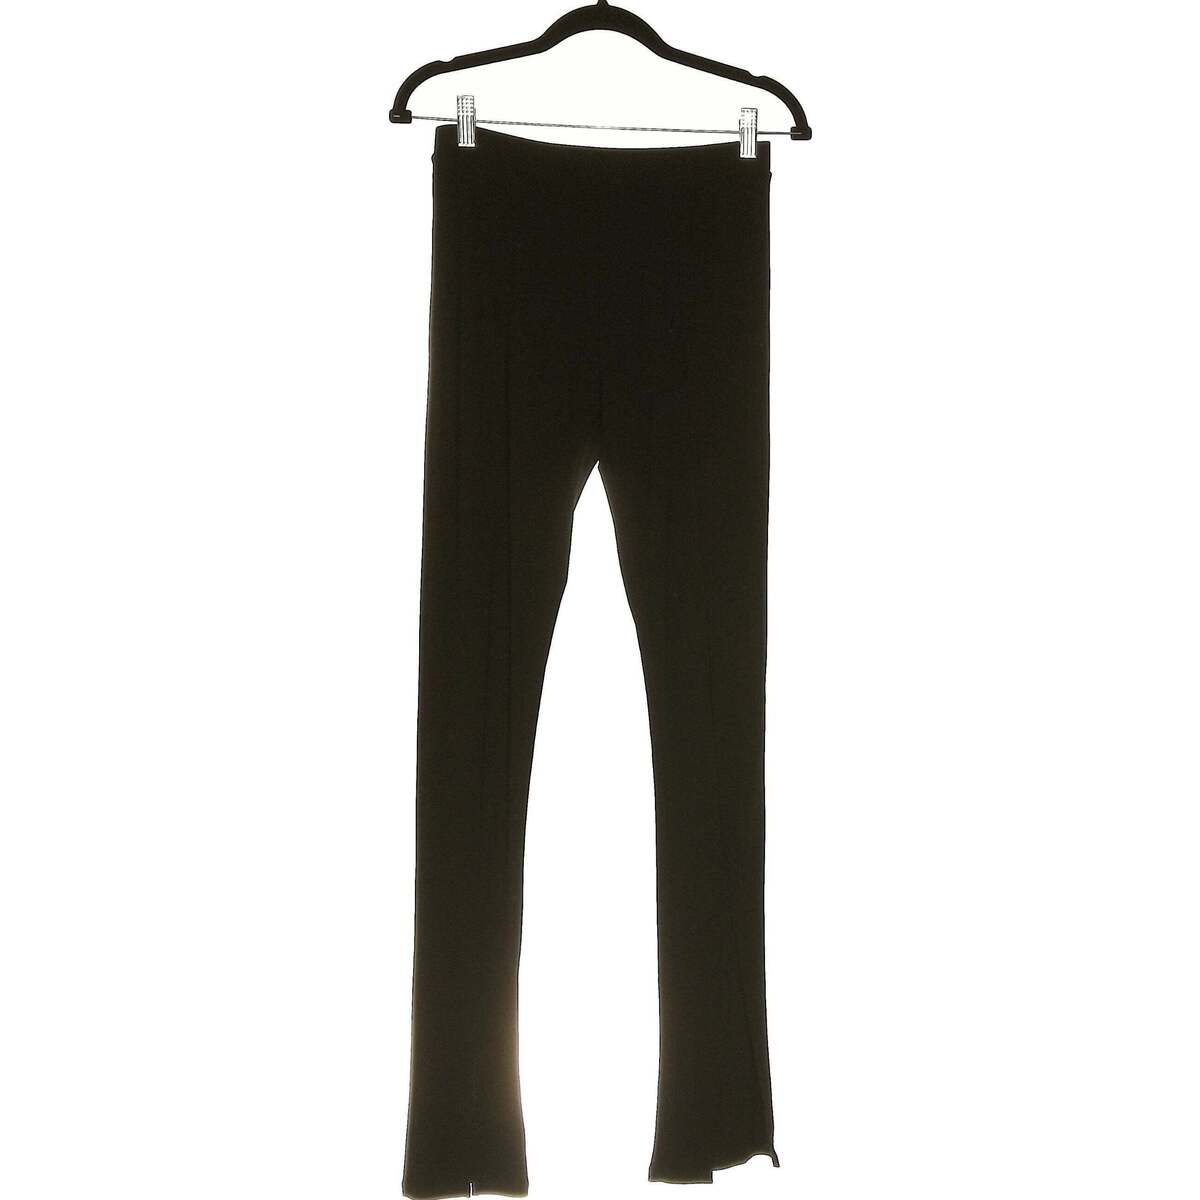 Vêtements Femme Pantalons Zara pantalon bootcut femme  38 - T2 - M Noir Noir